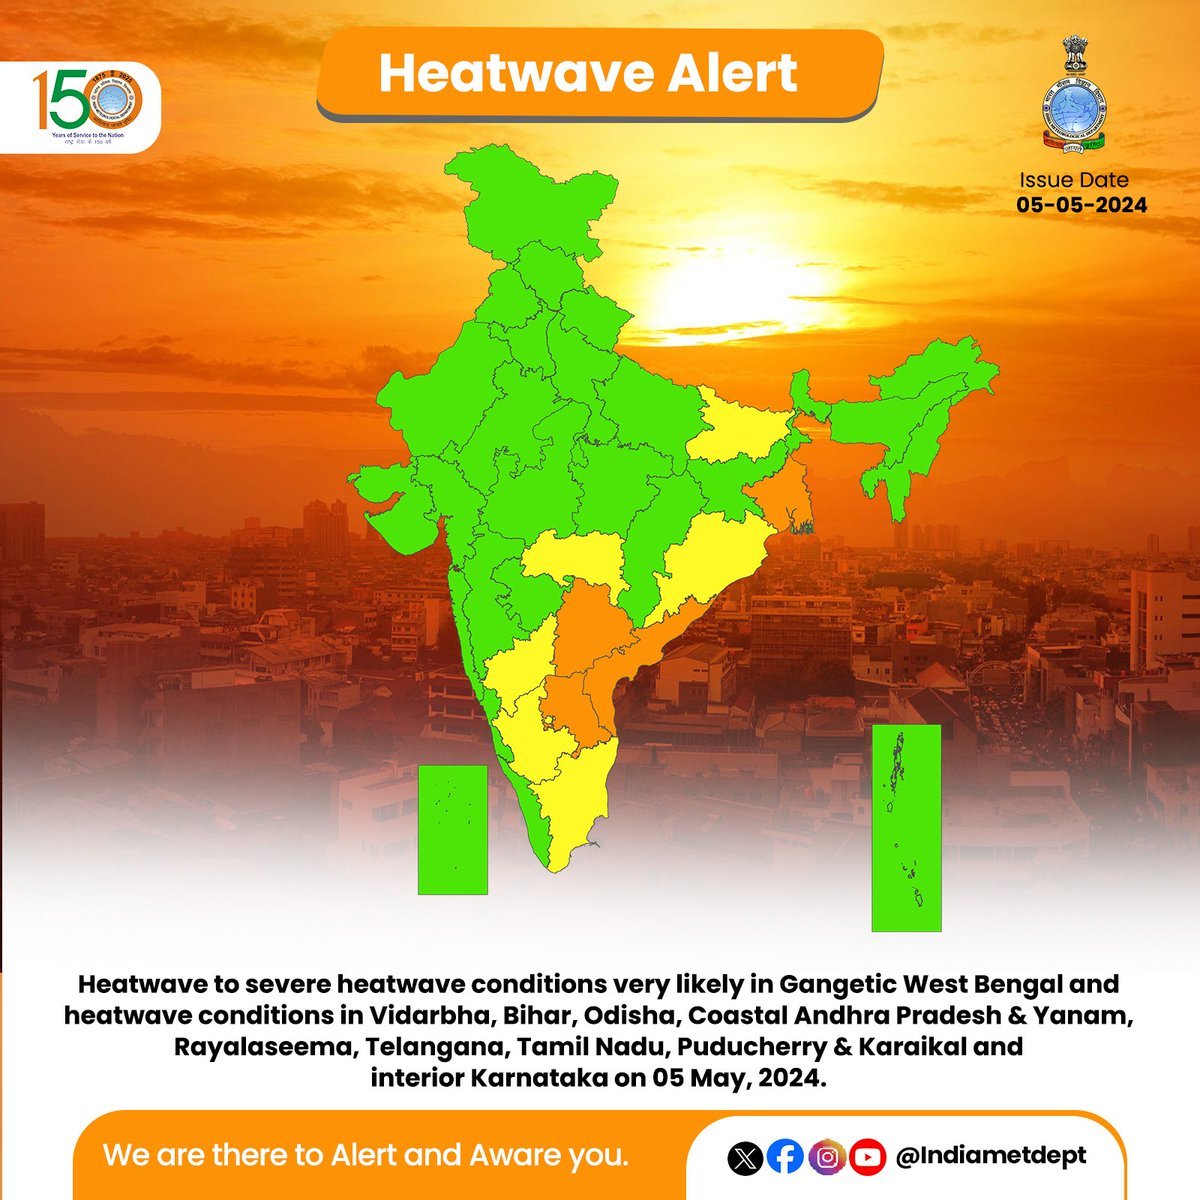 #Heatwave to severe heatwave conditions very likely in Gangetic #WestBengal and heatwave conditions in #Vidarbha, #Bihar, #Odisha, Coastal #AndhraPradesh & Yanam, Rayalaseema, Telangana, #TamilNadu, #Puducherry & Karaikal and interior #Karnataka on 05 May, 2024